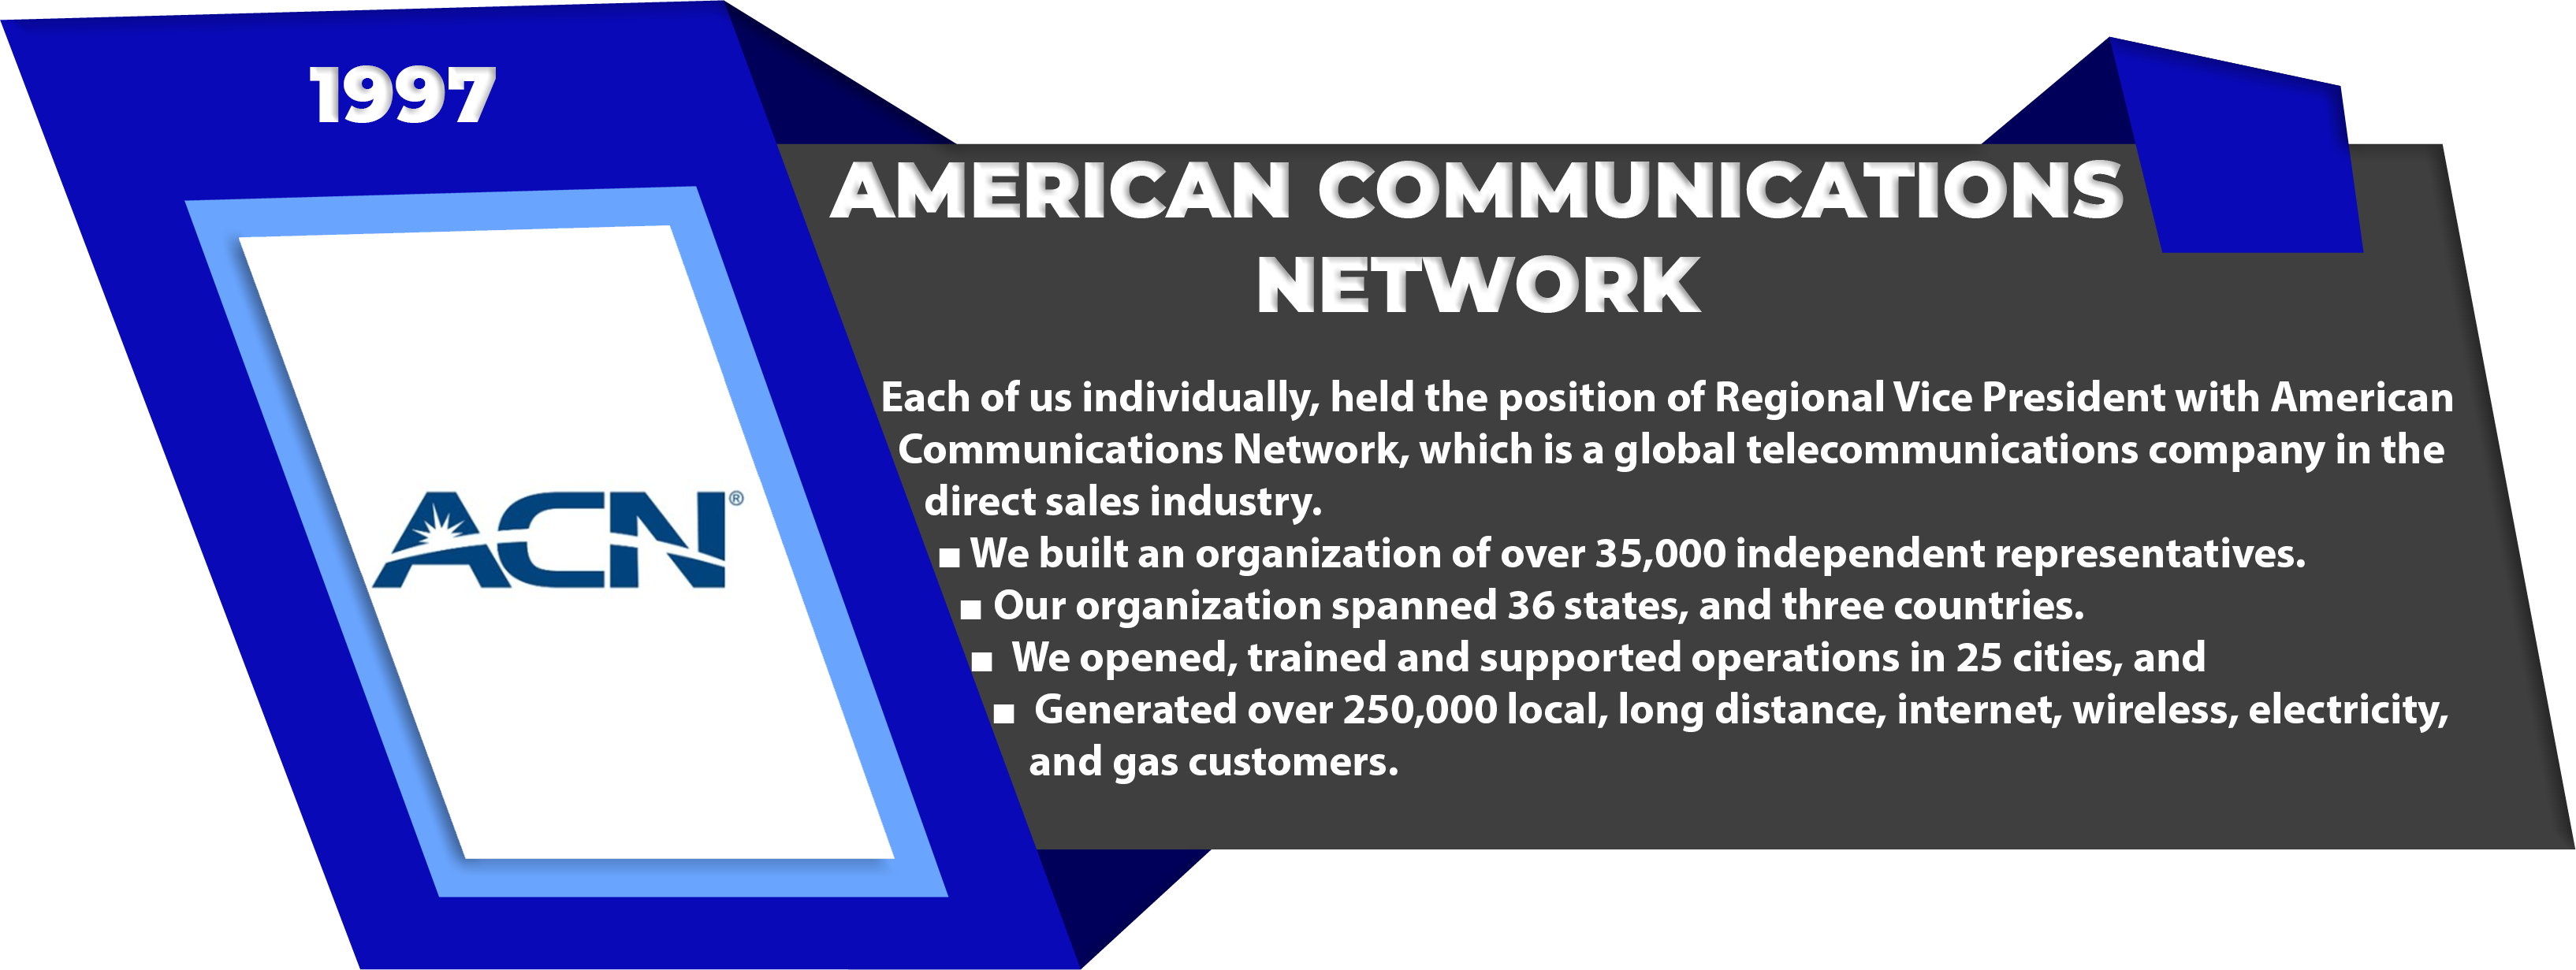 American Communications Network 1997 – 2003